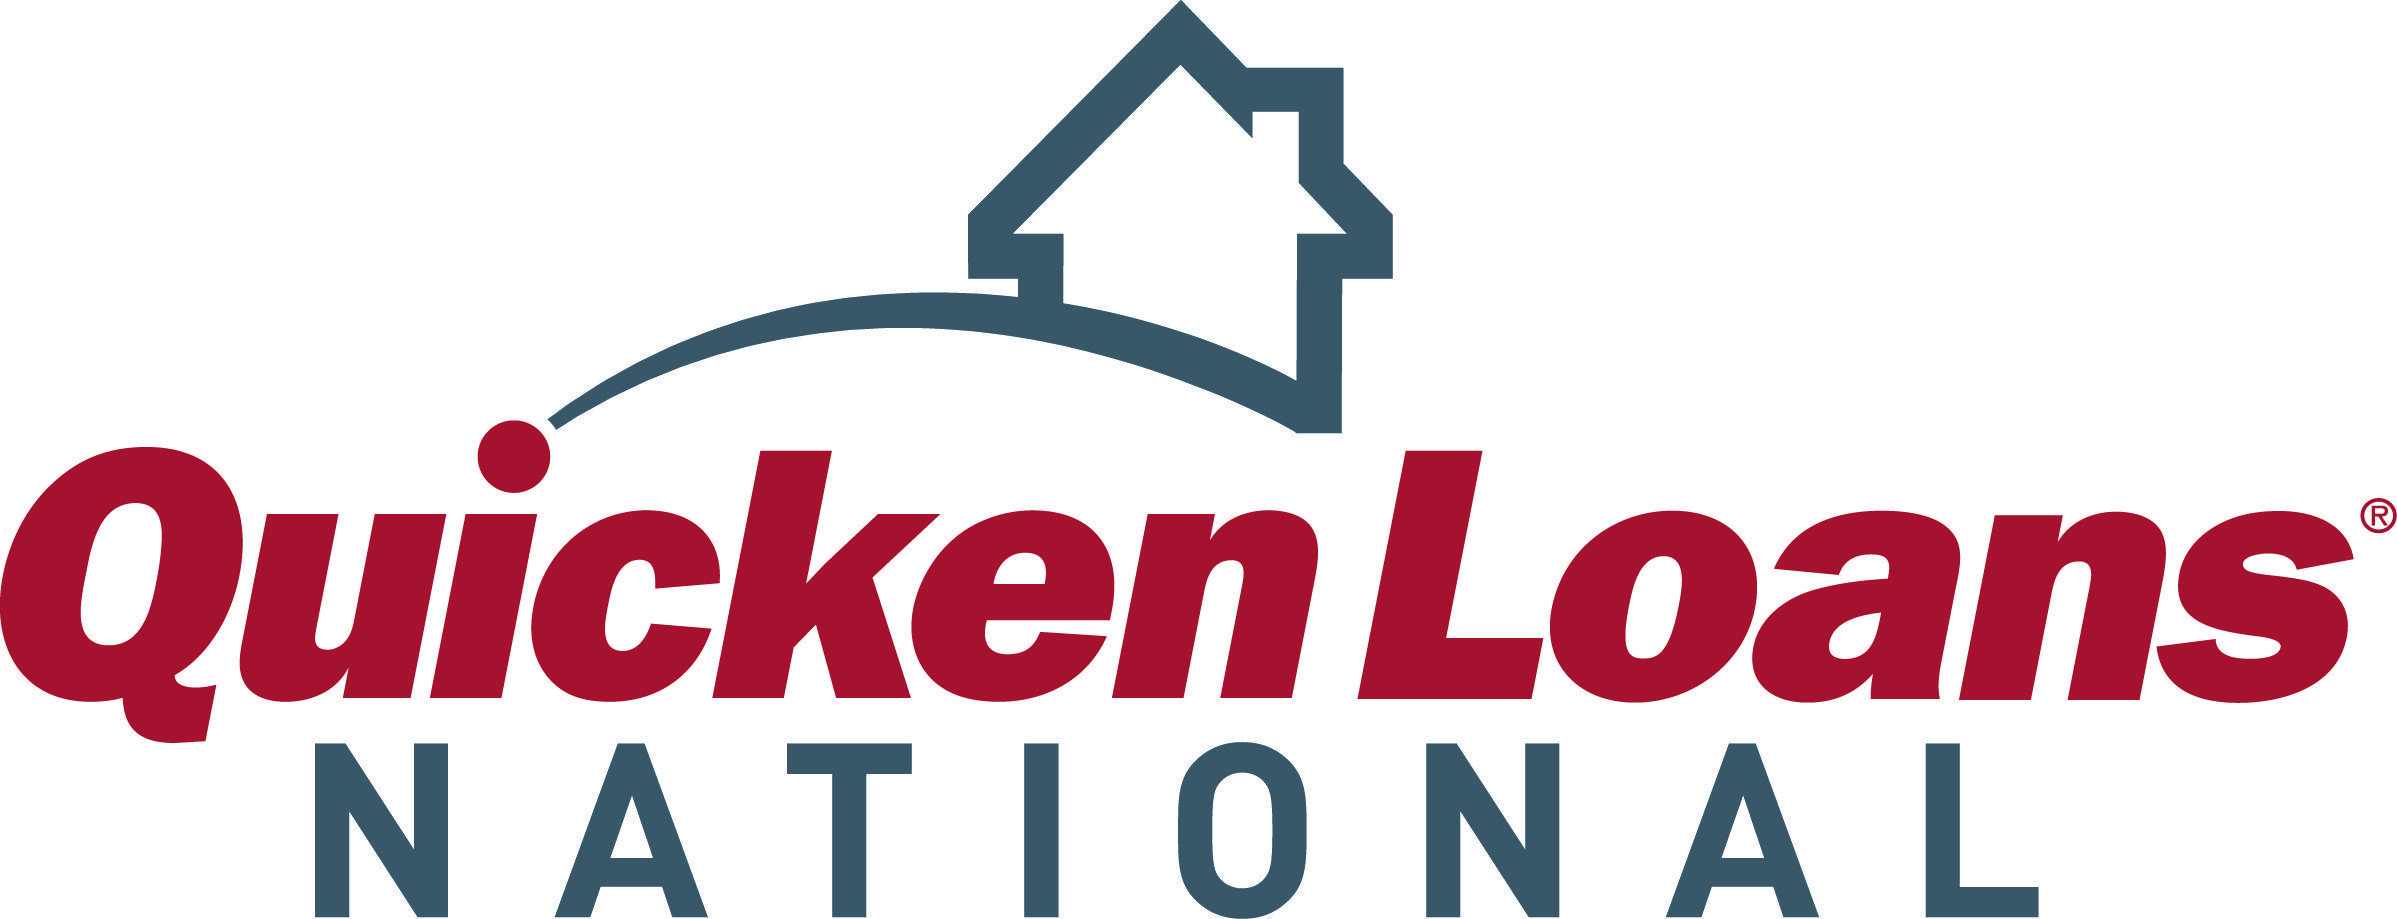 Quicken Loans Logo - Fantasy Four - Quicken Loans National